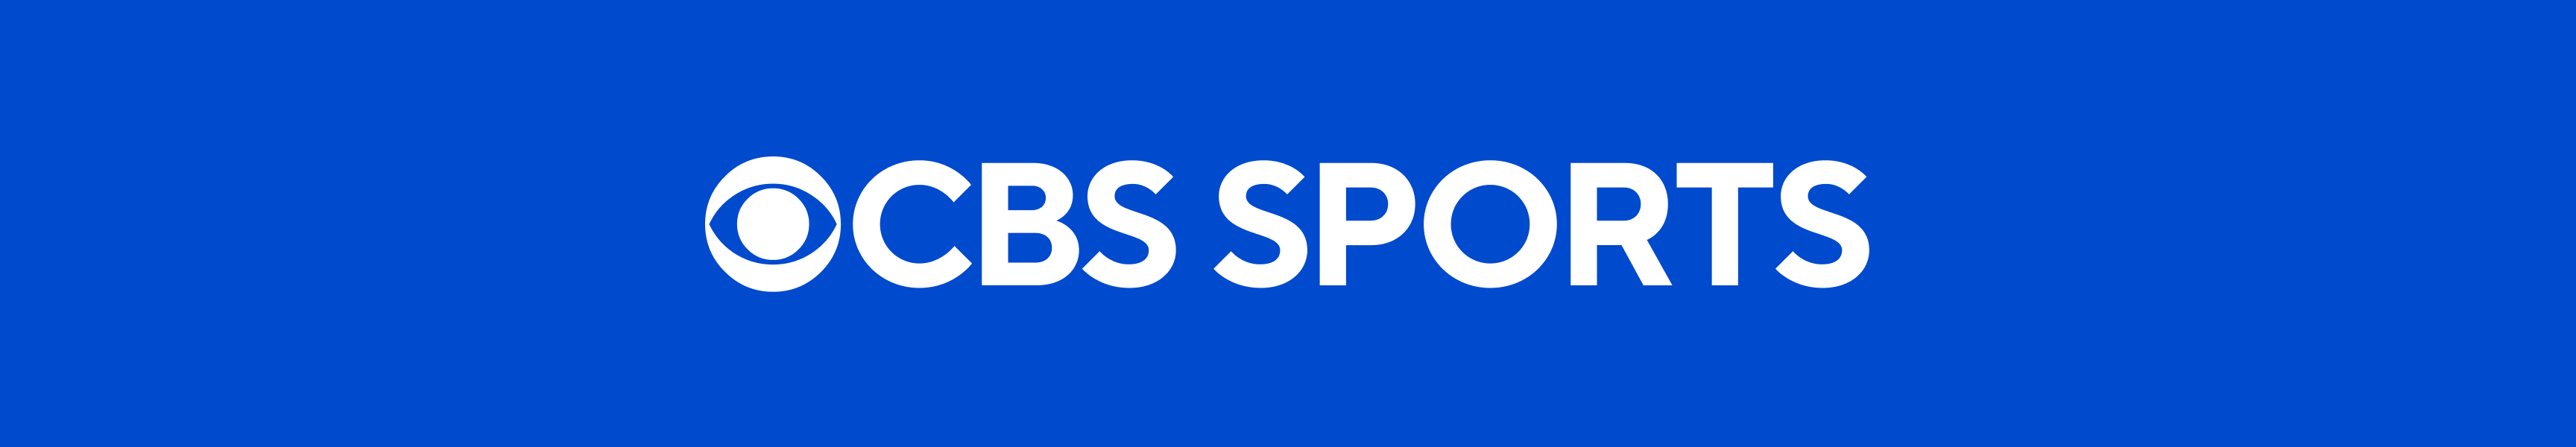 CBS Sports Meilleures ventes